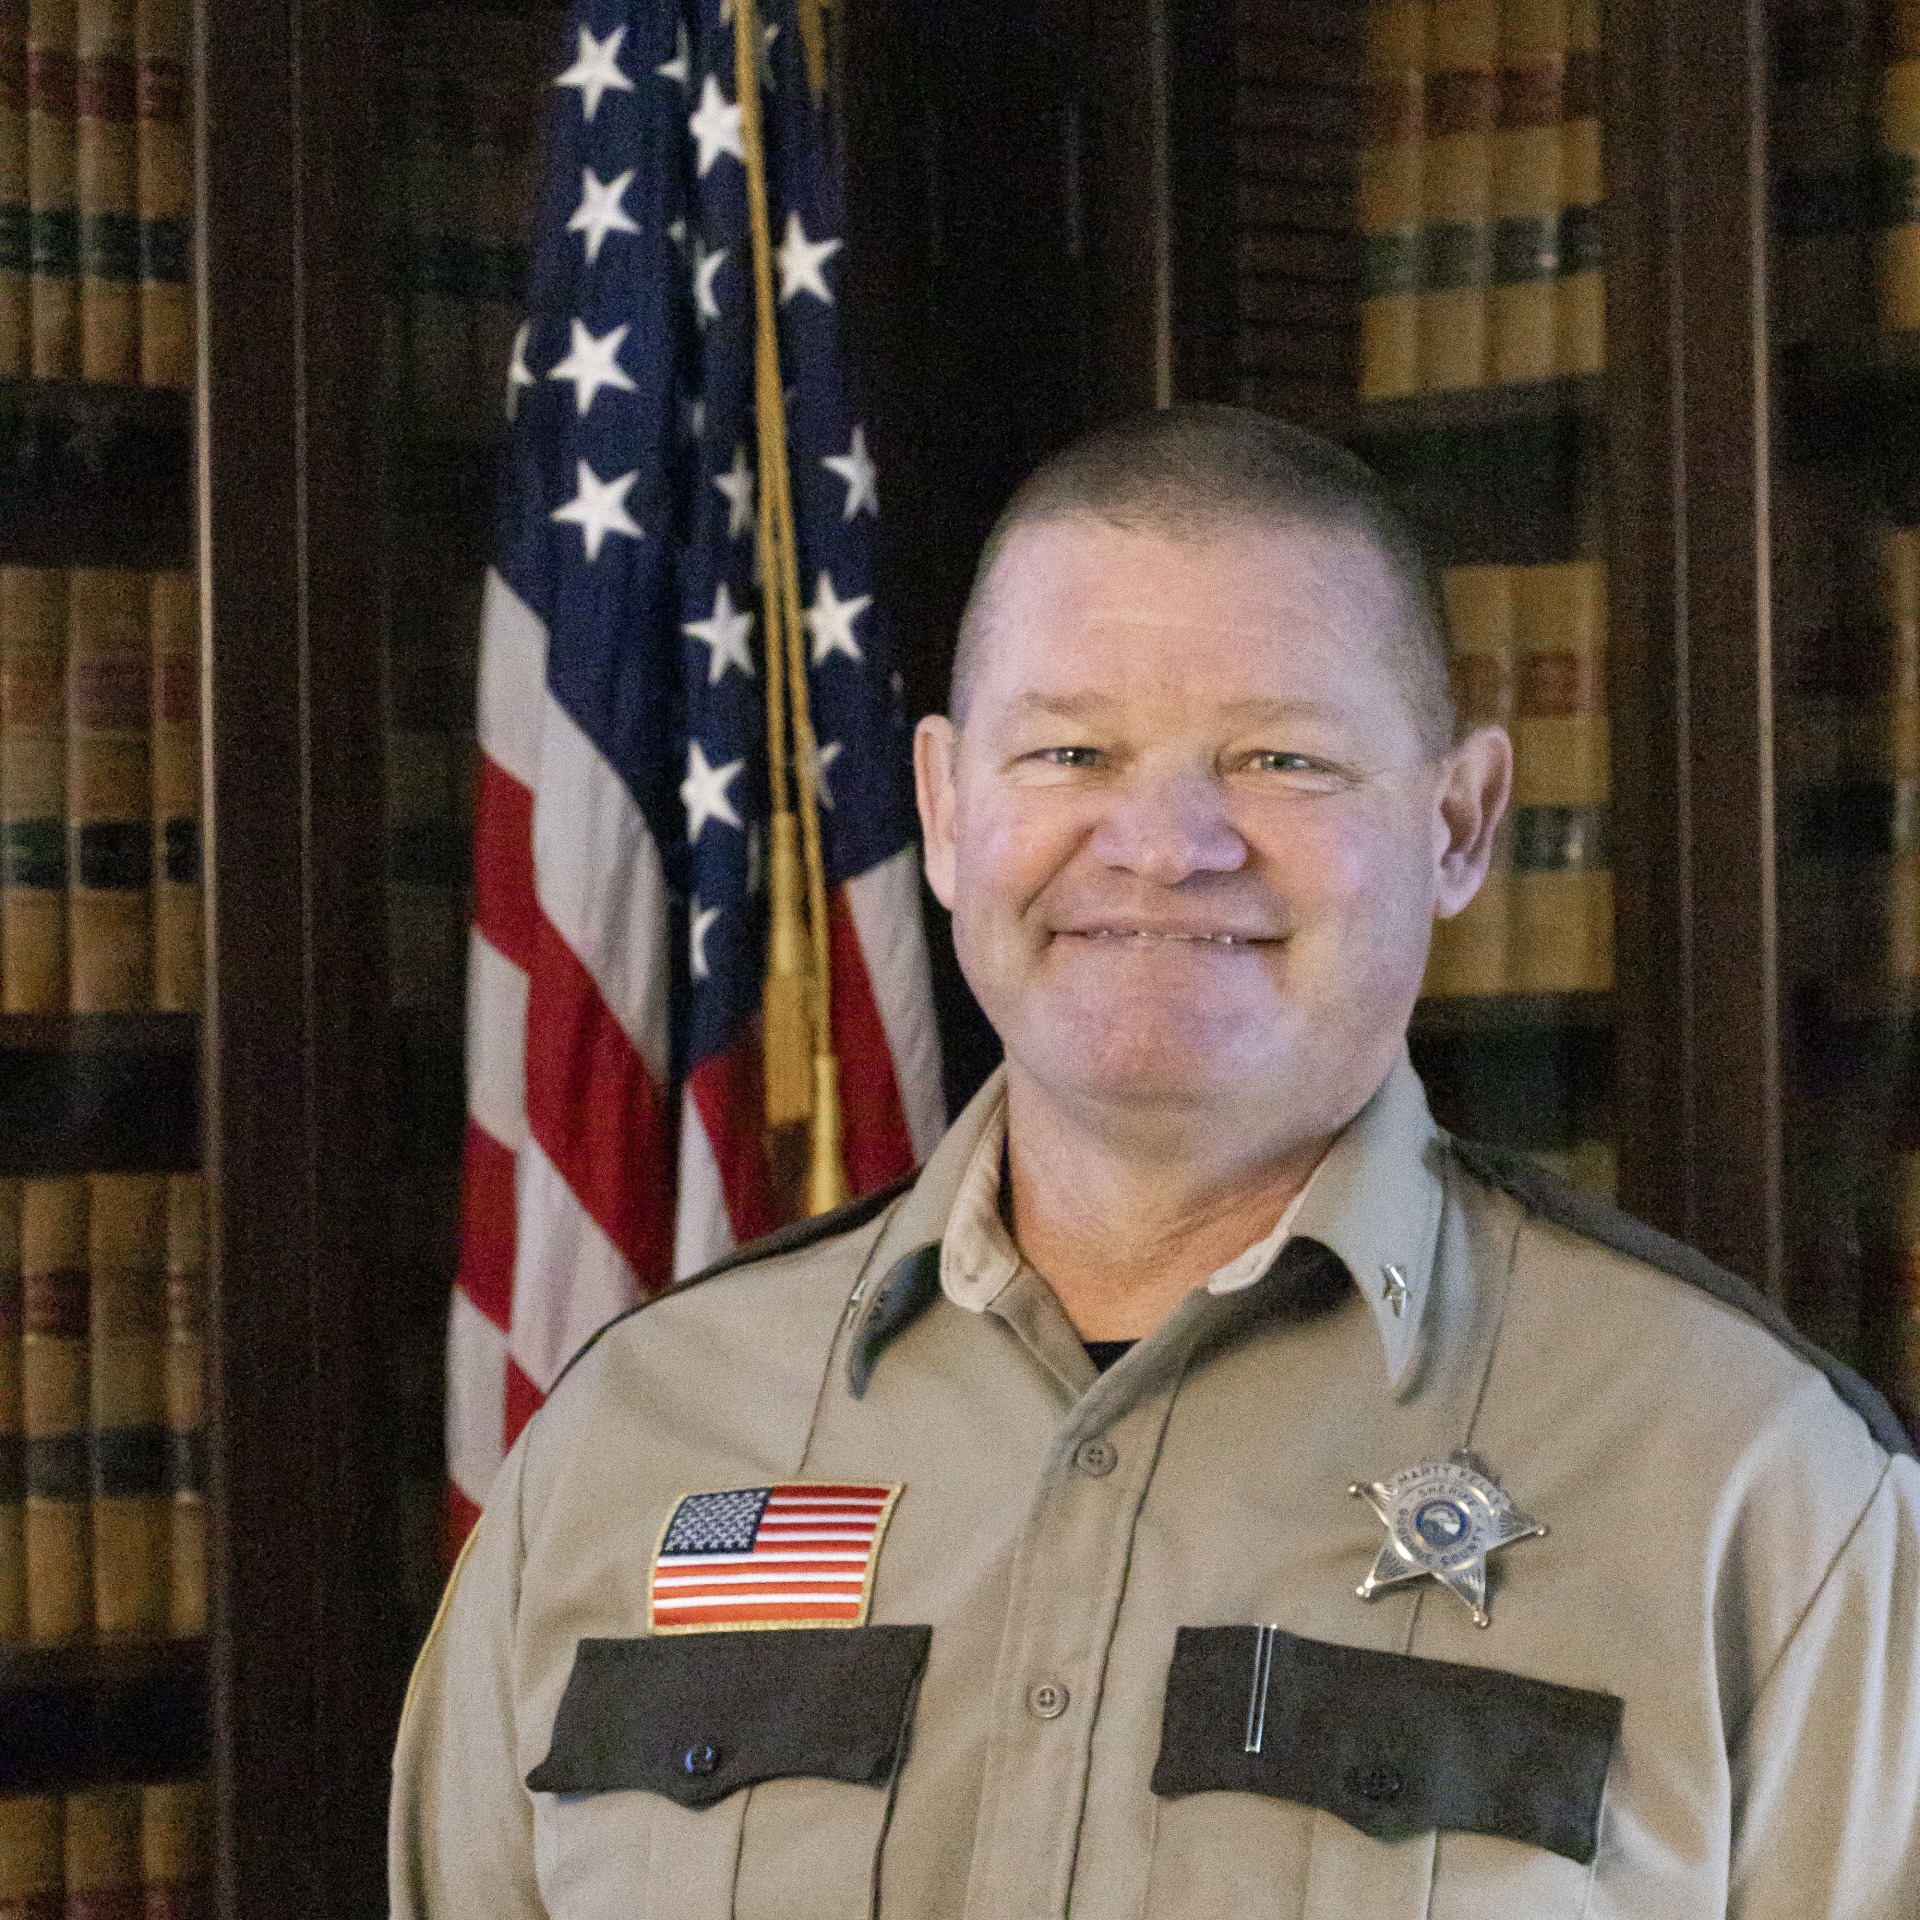 Sheriff Martin Kelly